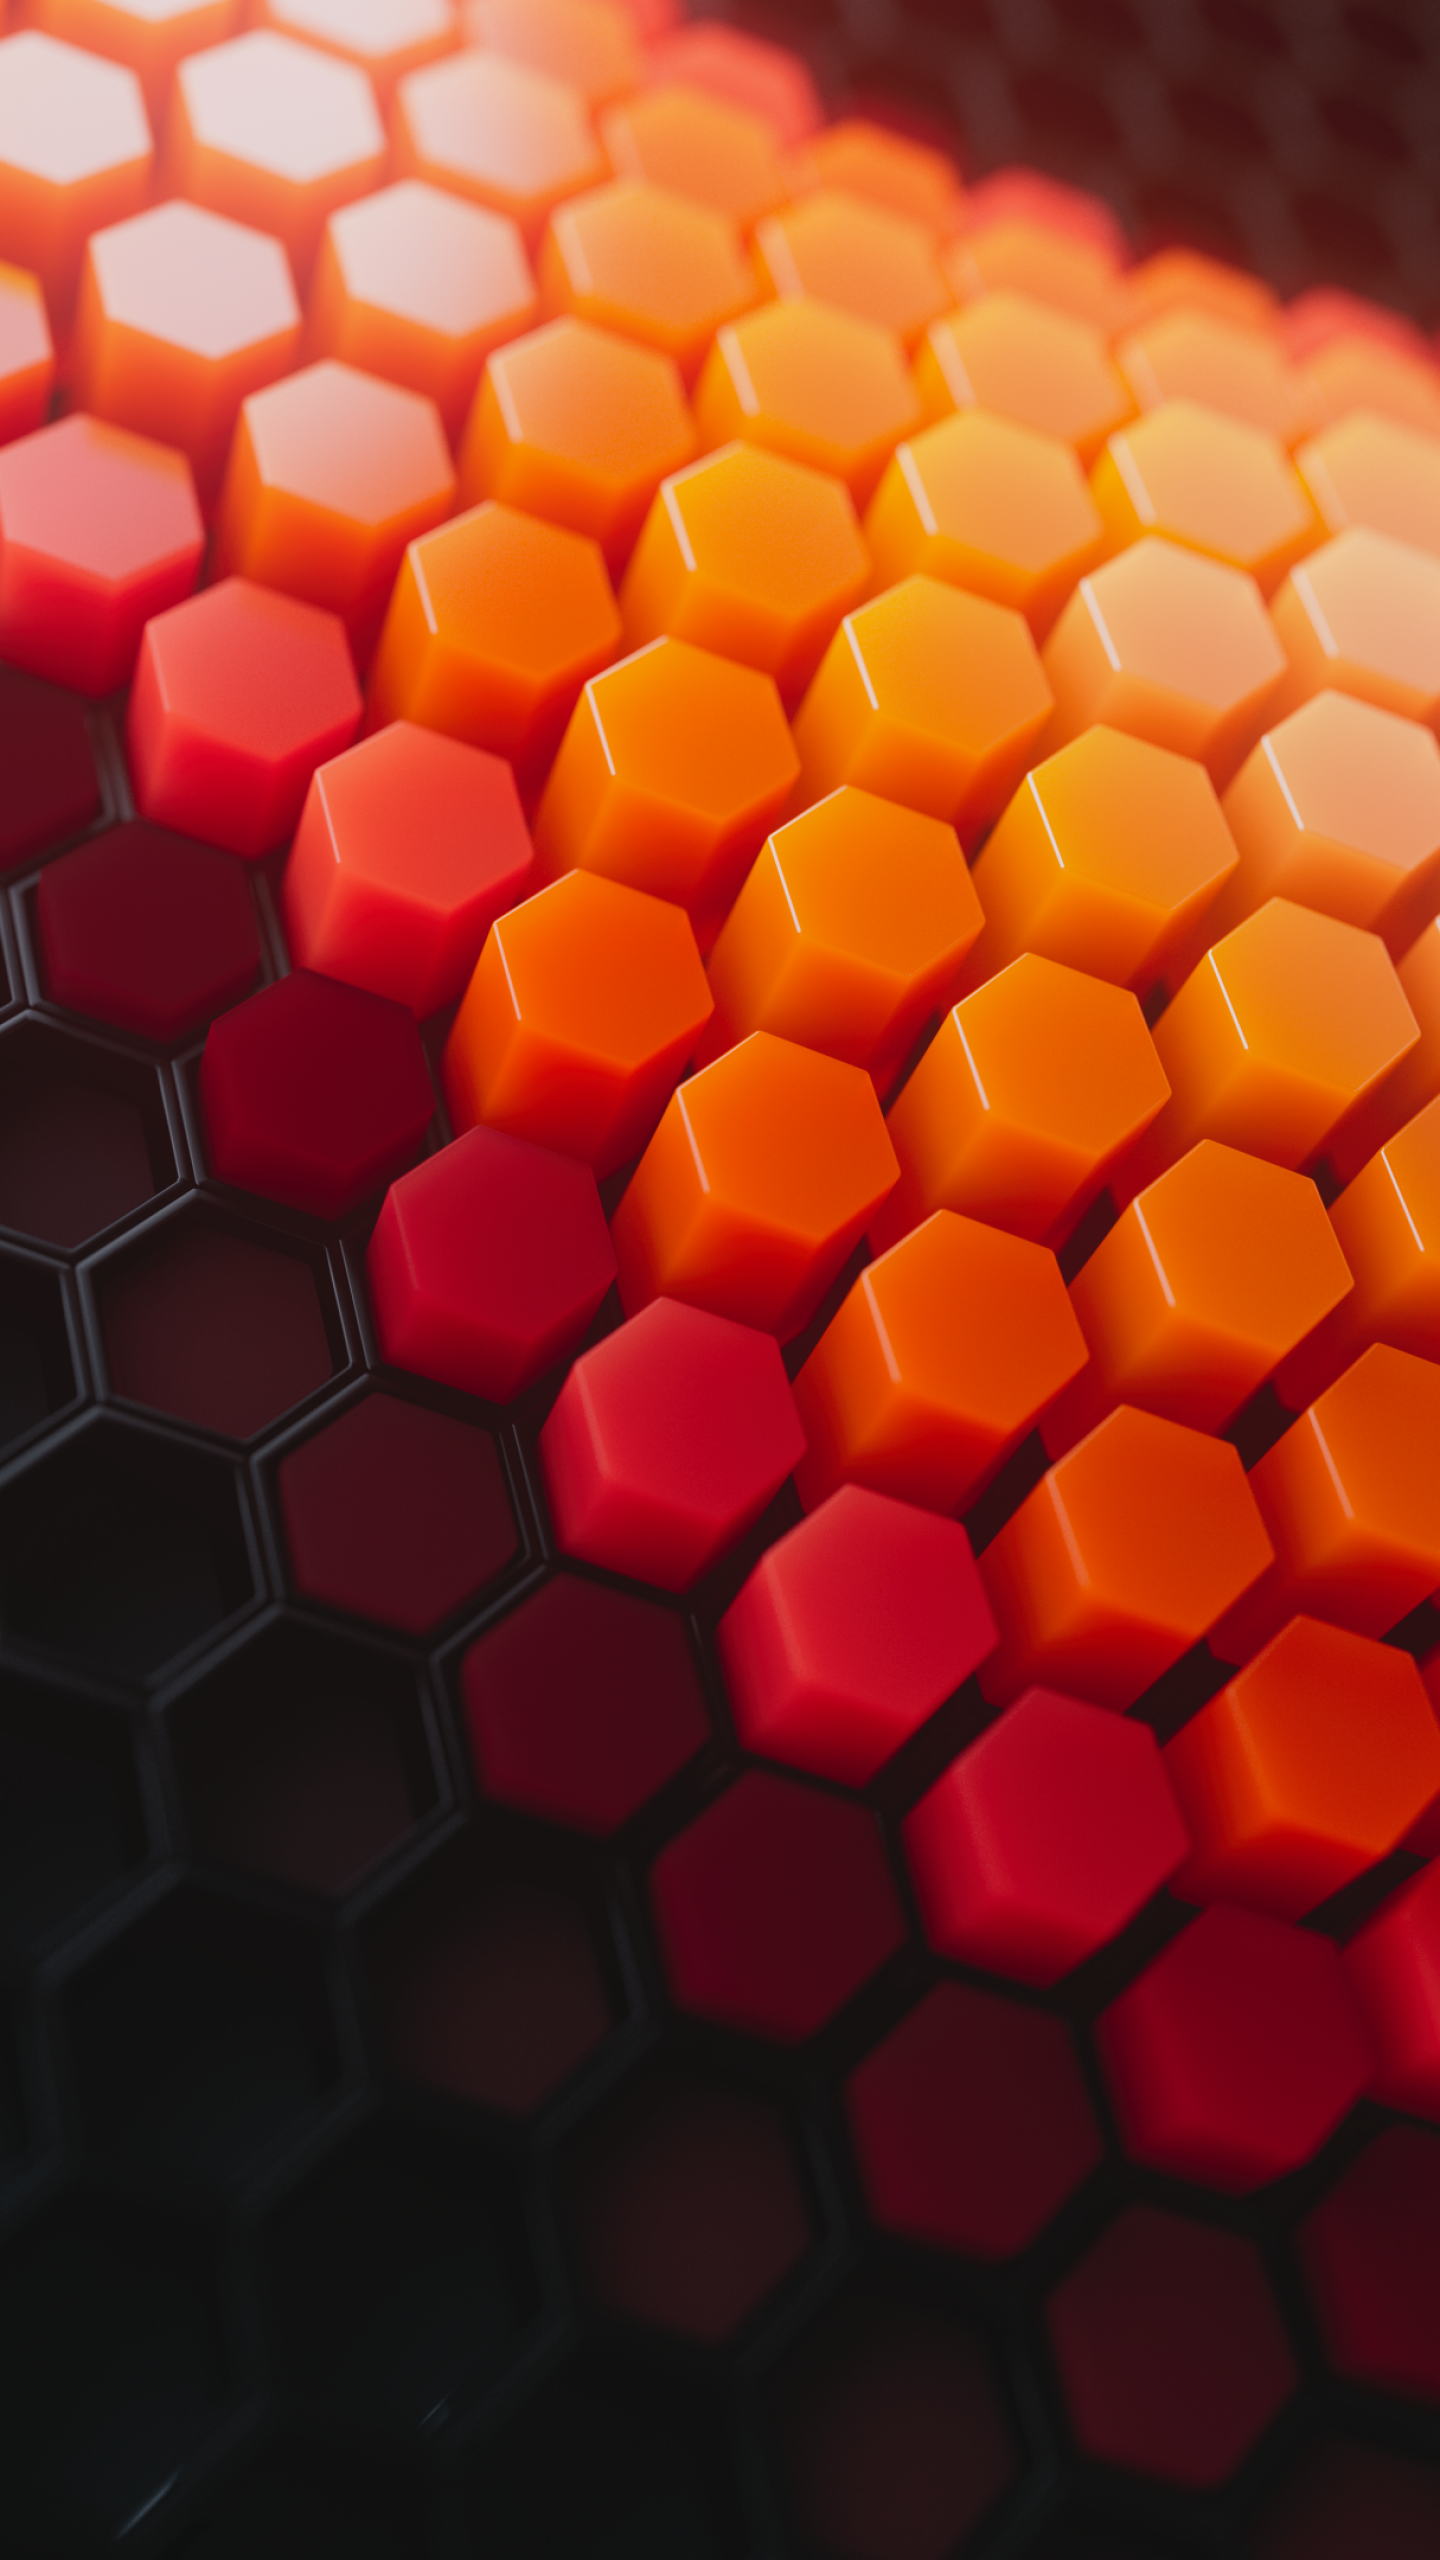 Hexagons Wallpaper 4K, Patterns, Orange background, Orange blocks, Abstract